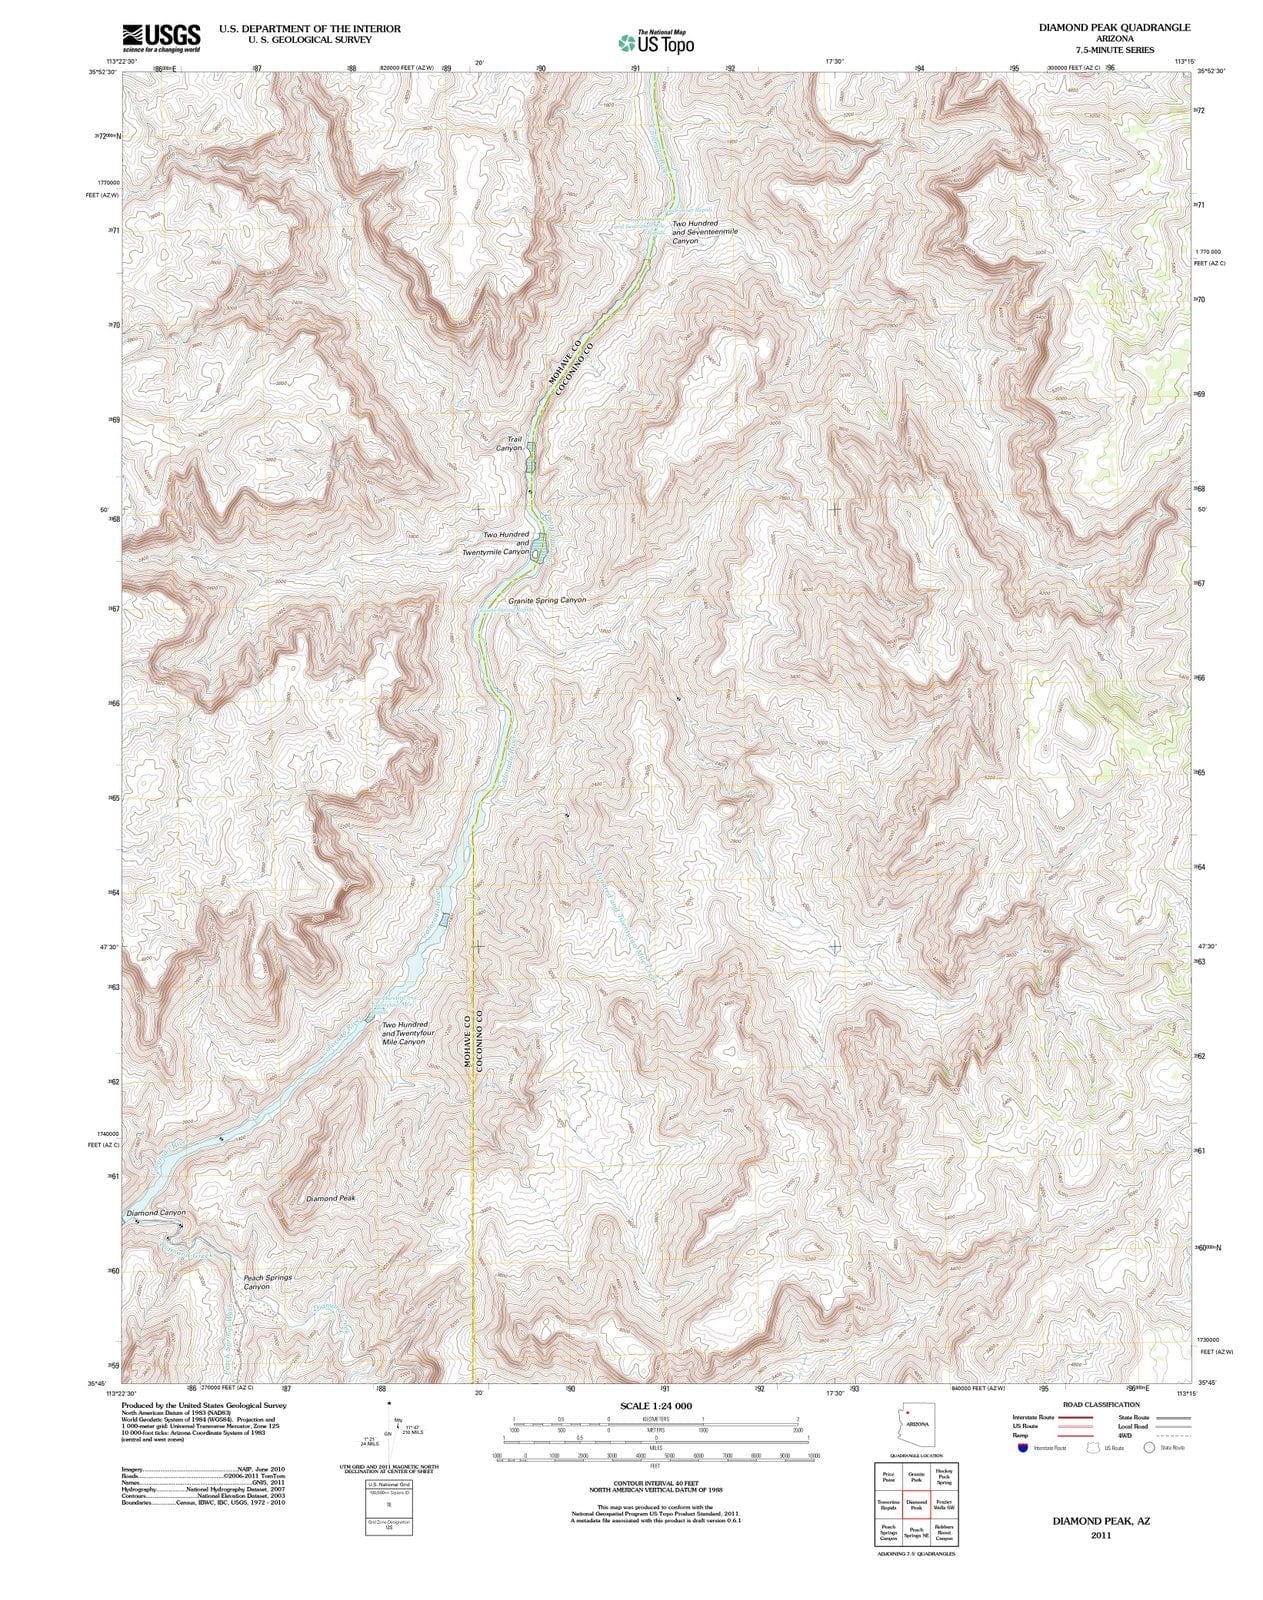 2011 Diamond Peak, AZ - Arizona - USGS Topographic Map